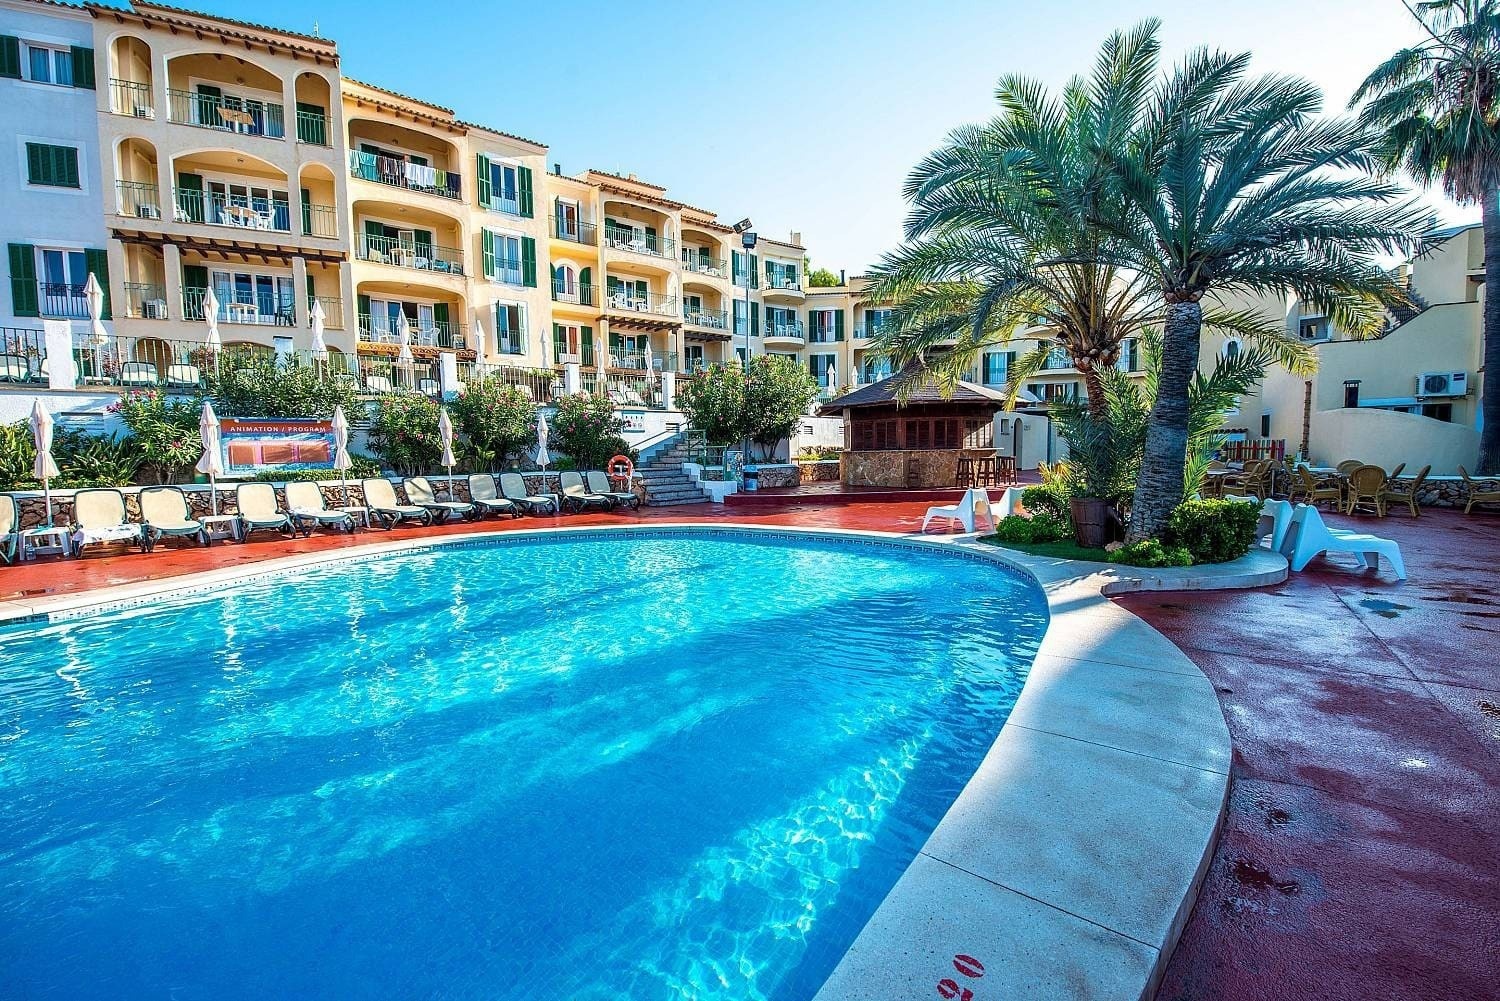 Facilidades y piscina exterior del hotel Ona Cala Pi, en Mallorca